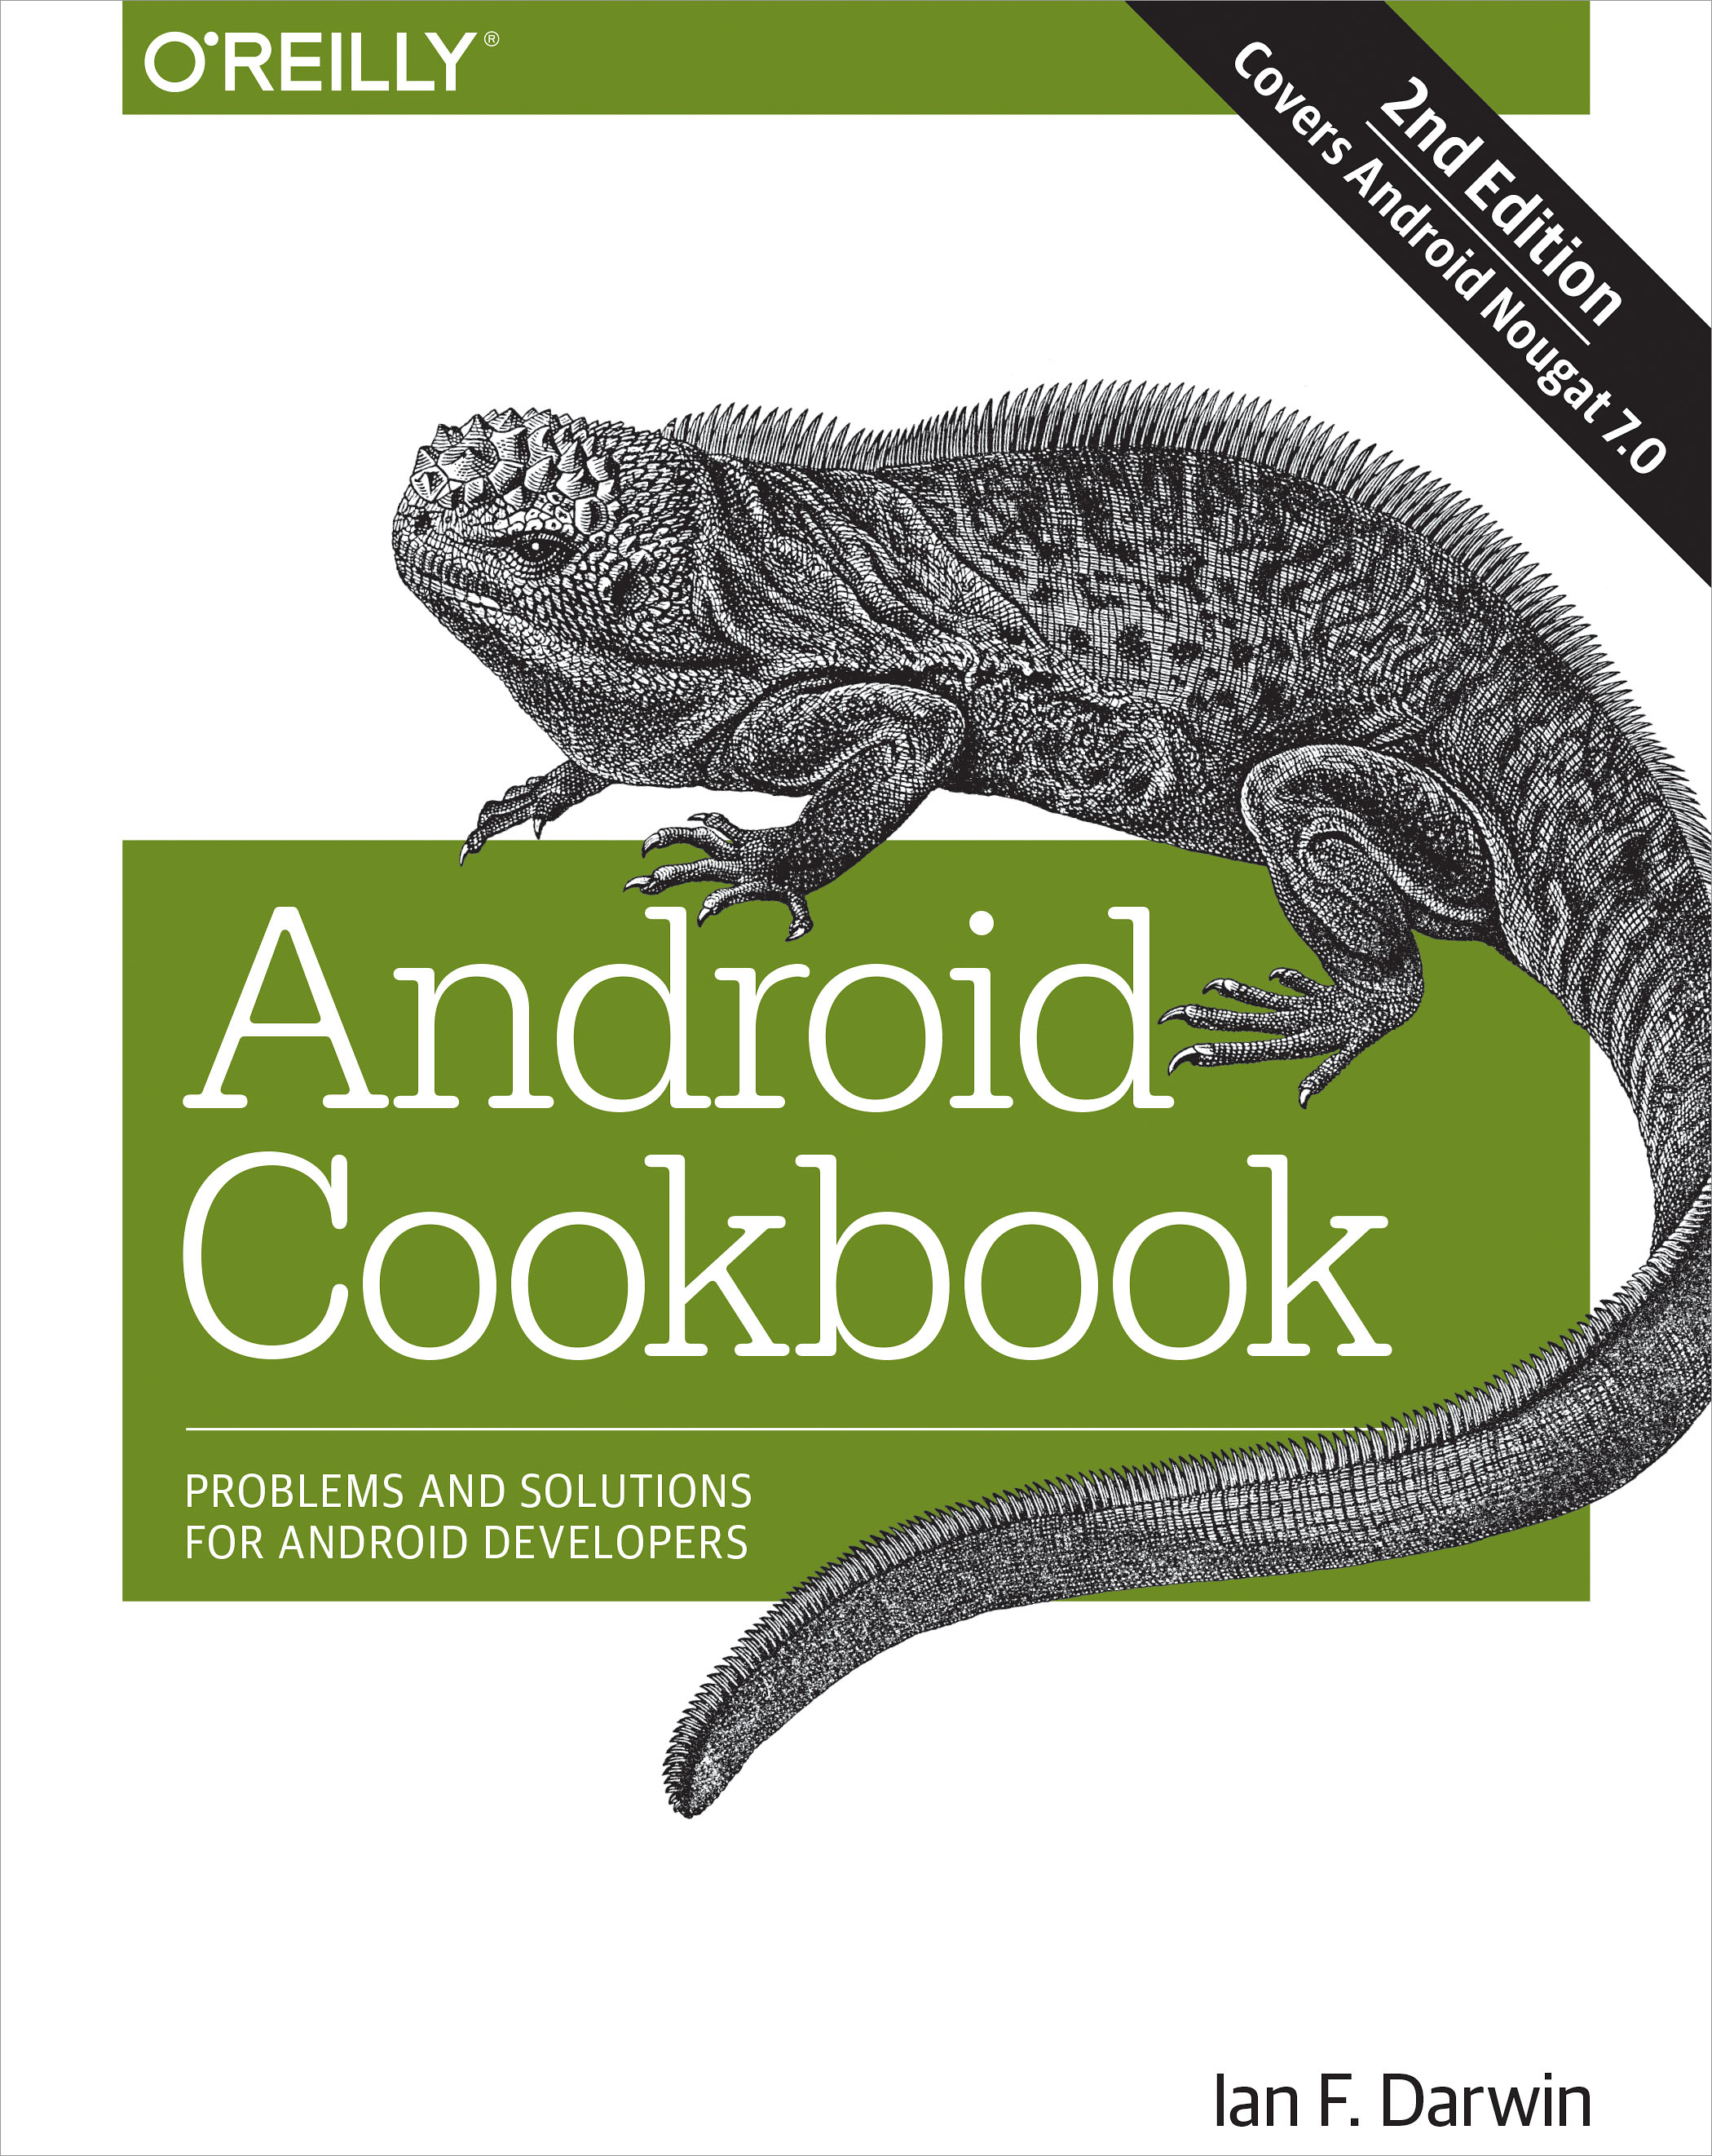 androidcookbook